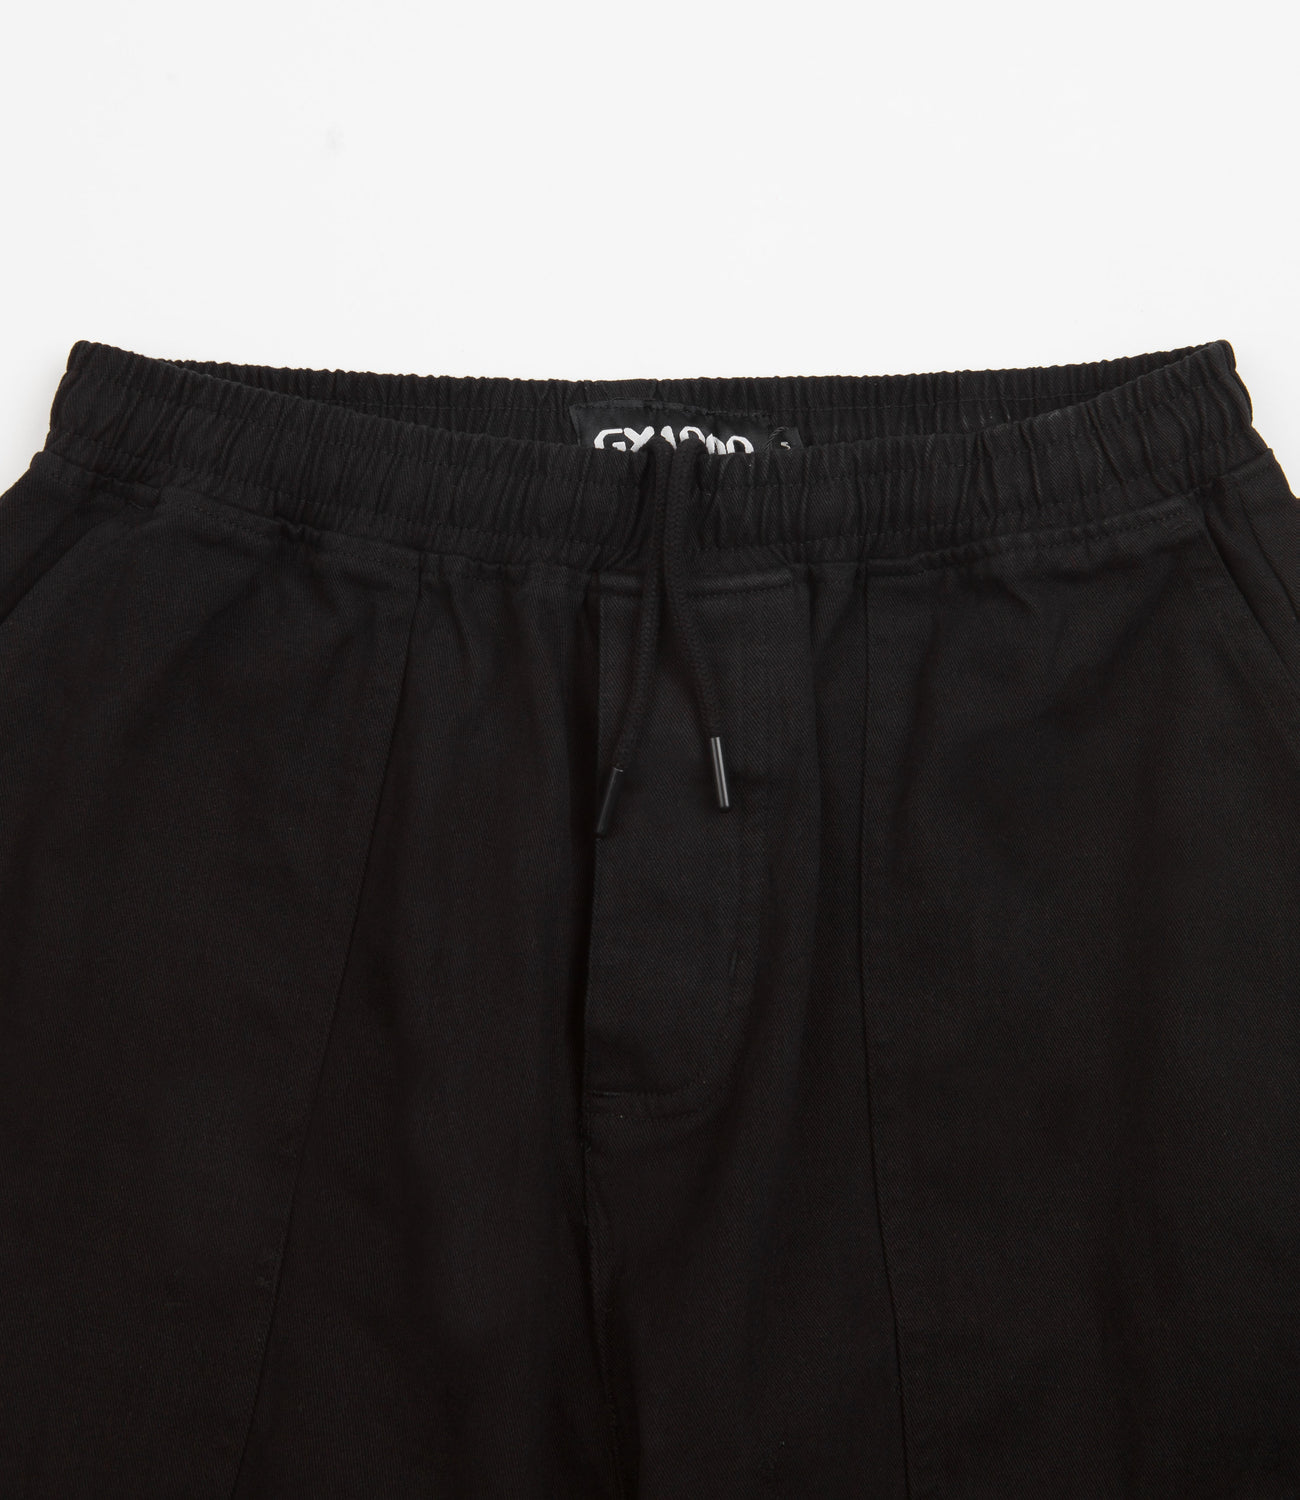 GX1000 Spray Paint Pants - Black | Flatspot